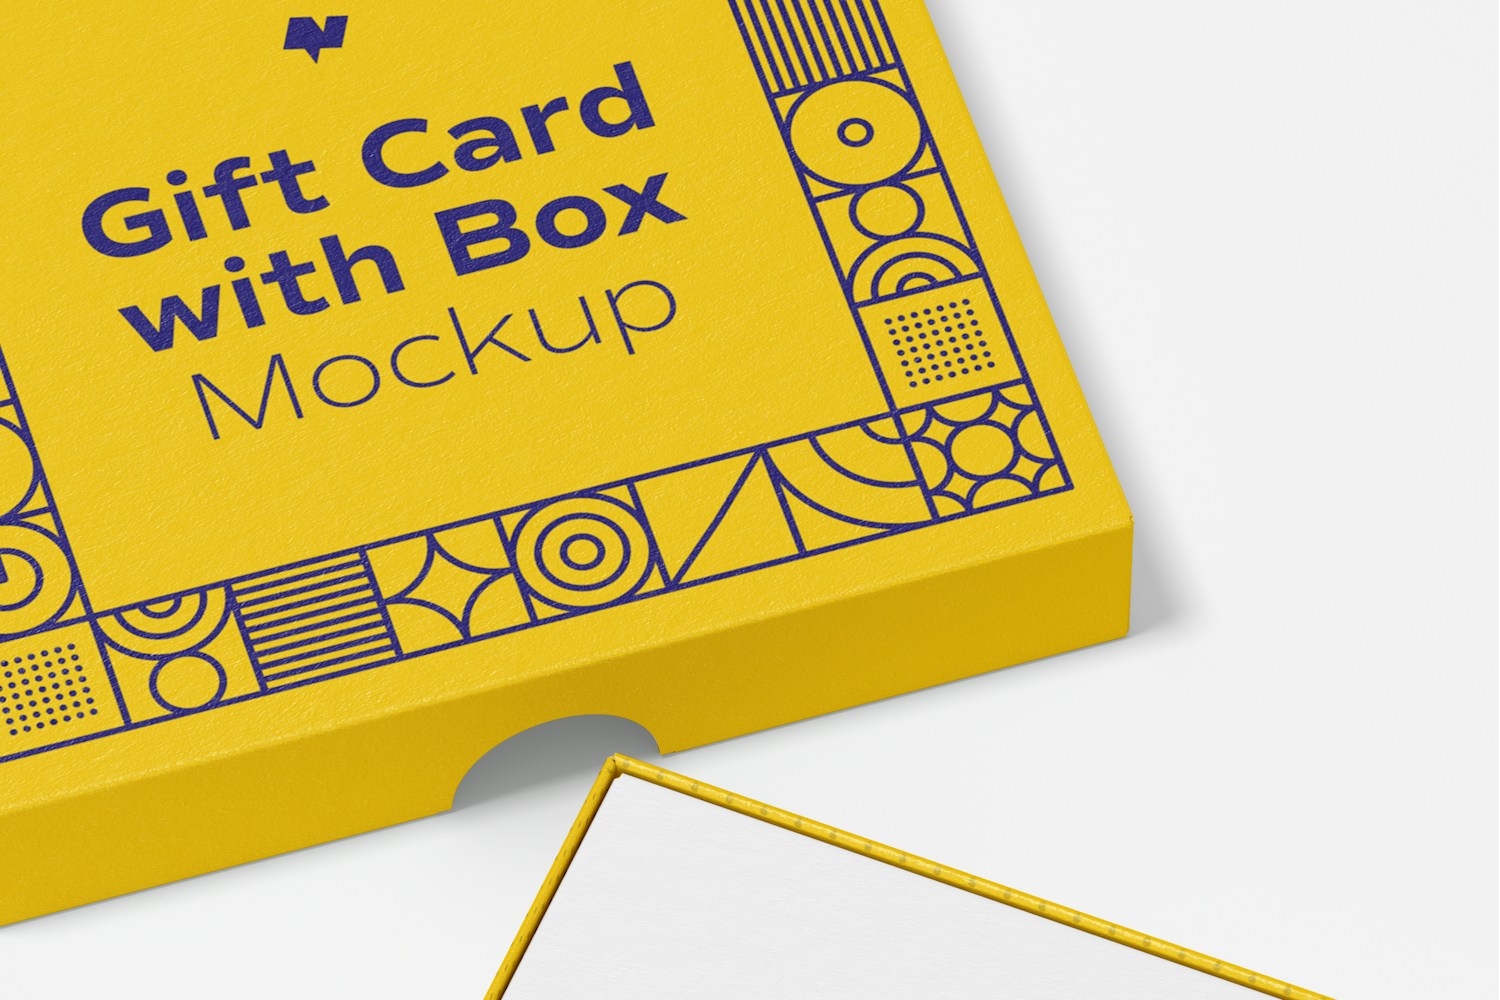 Gift Card with Box Mockup, Close-Up